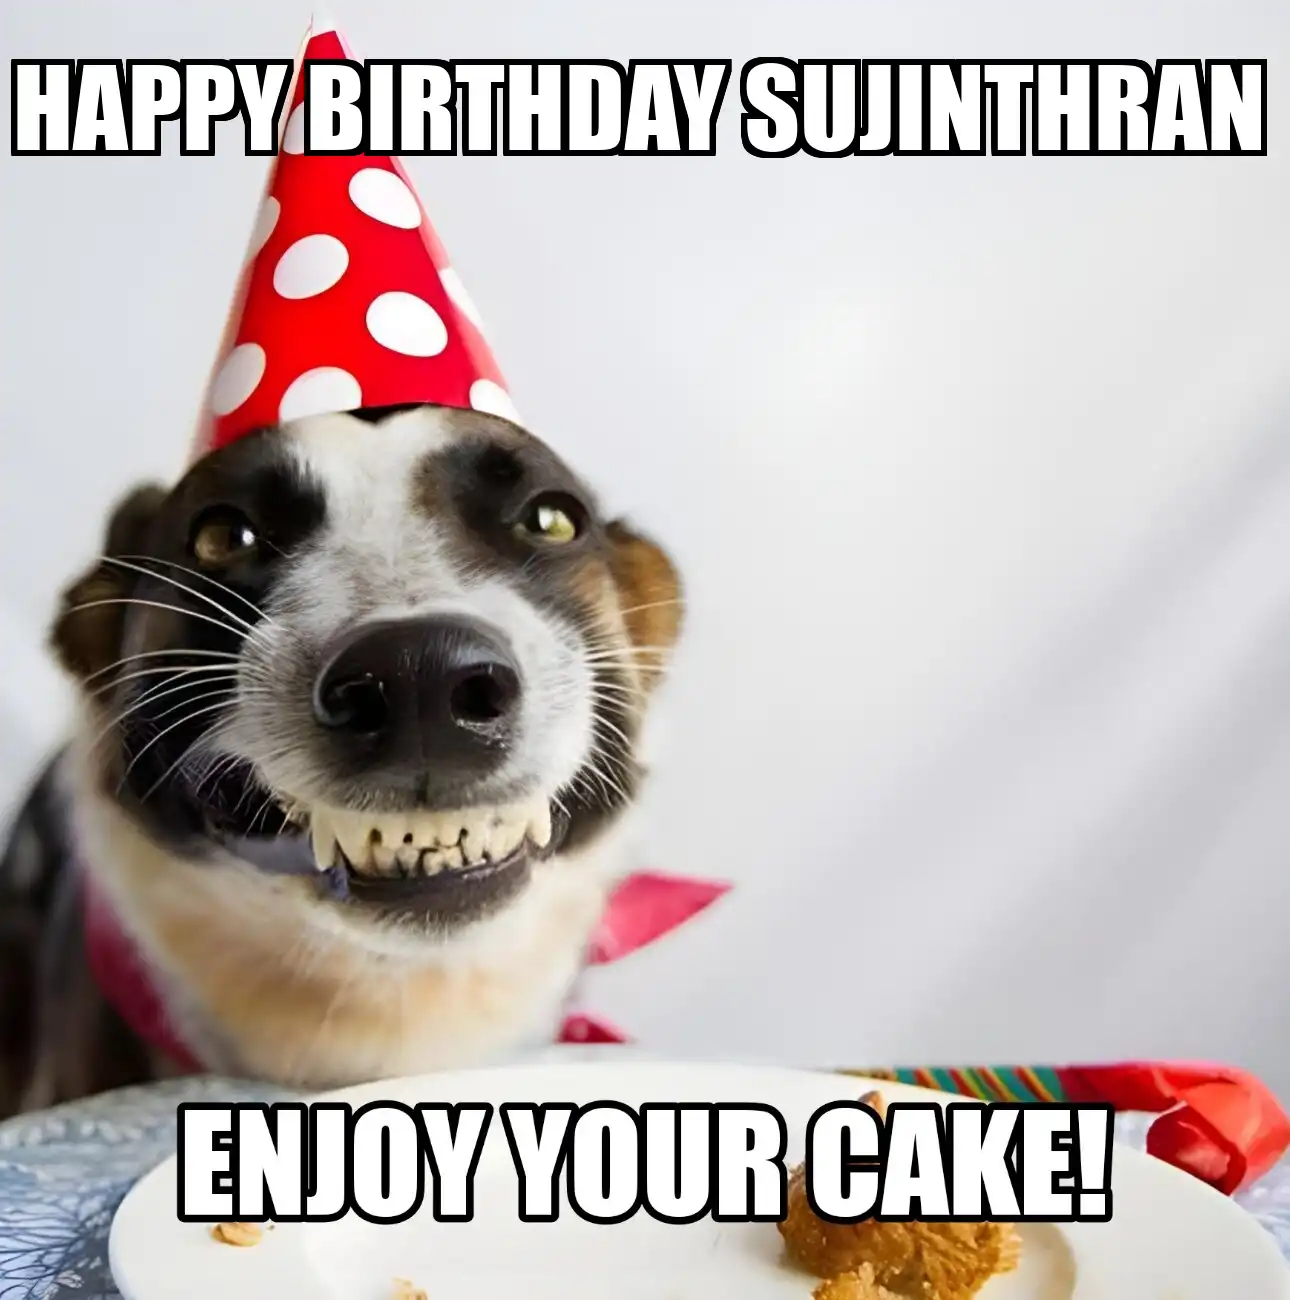 Happy Birthday Sujinthran Enjoy Your Cake Dog Meme